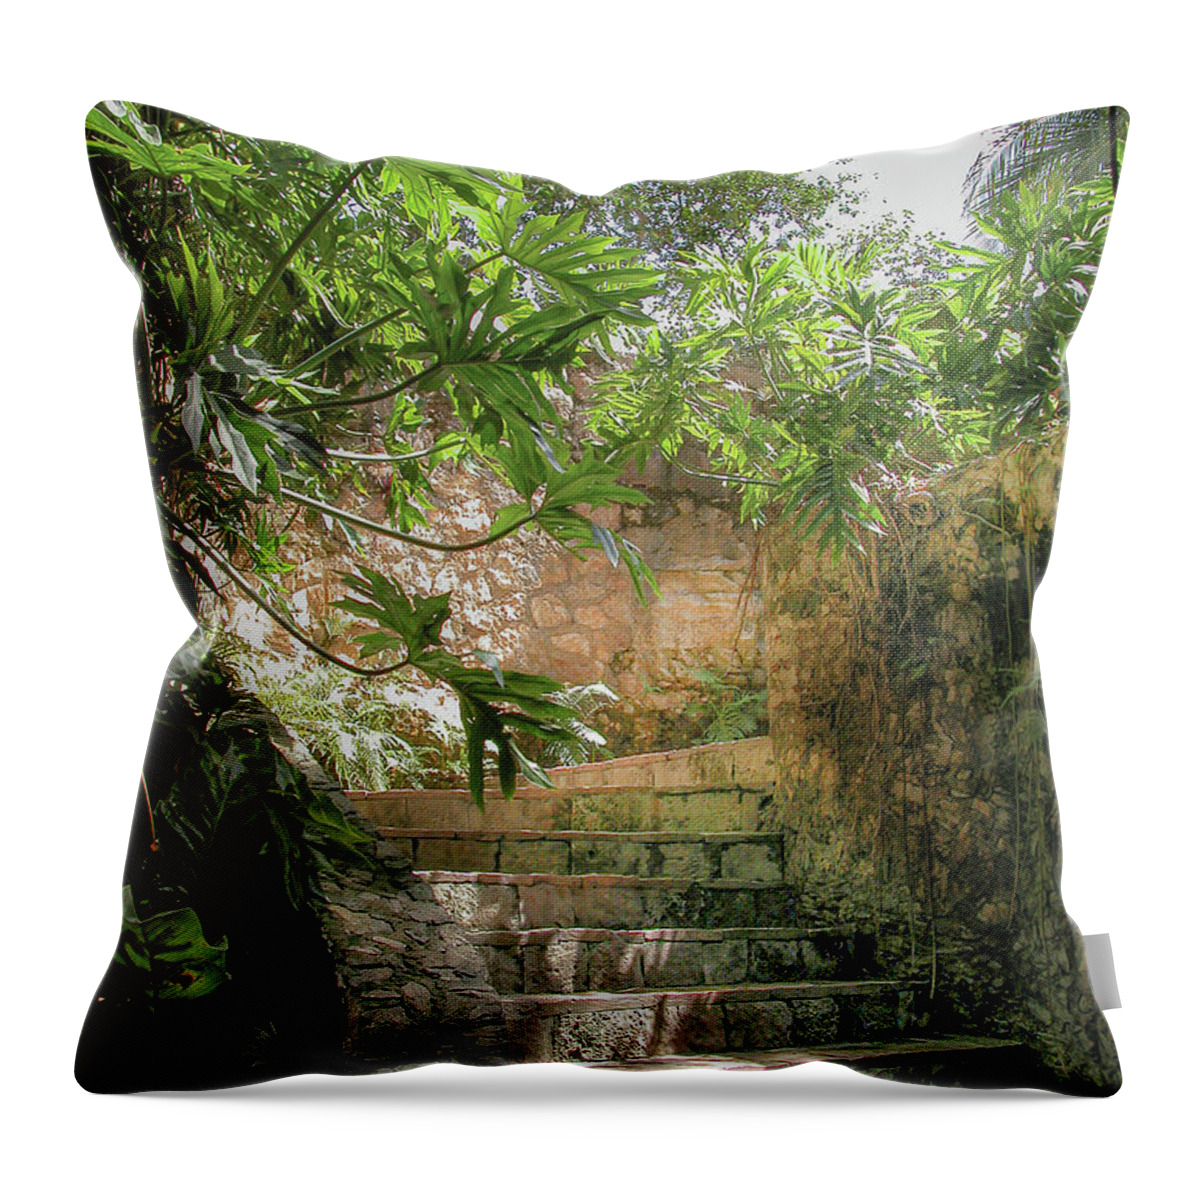 Chichen Itza Throw Pillow featuring the photograph Steps near cenote - Chichen Itza by Frank Mari